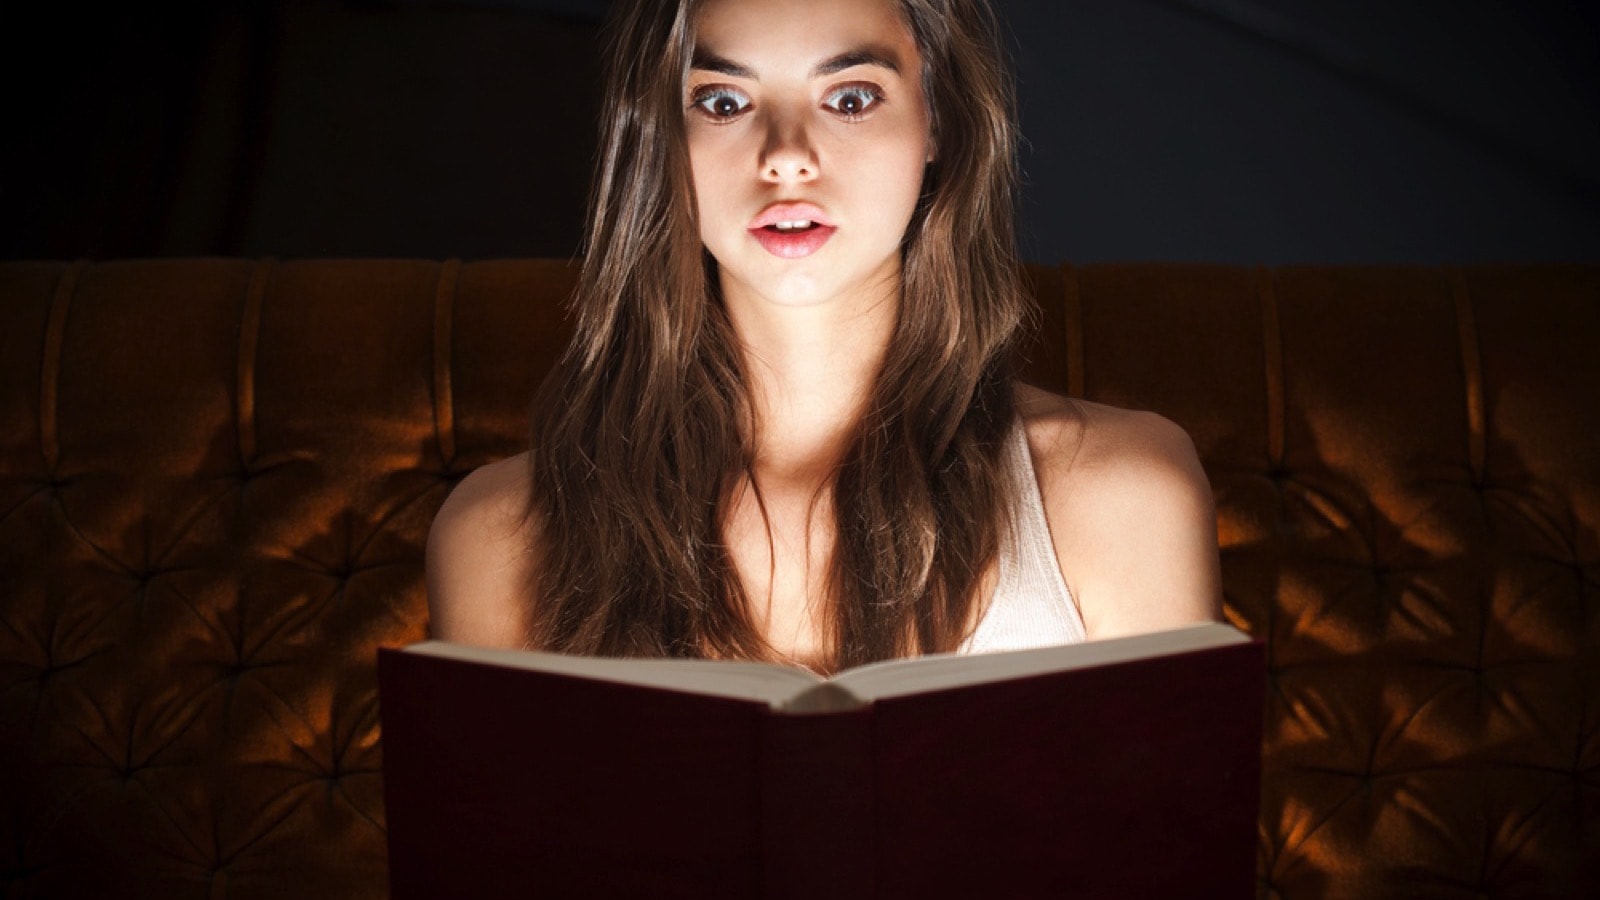 Beautiful girl reading book at night